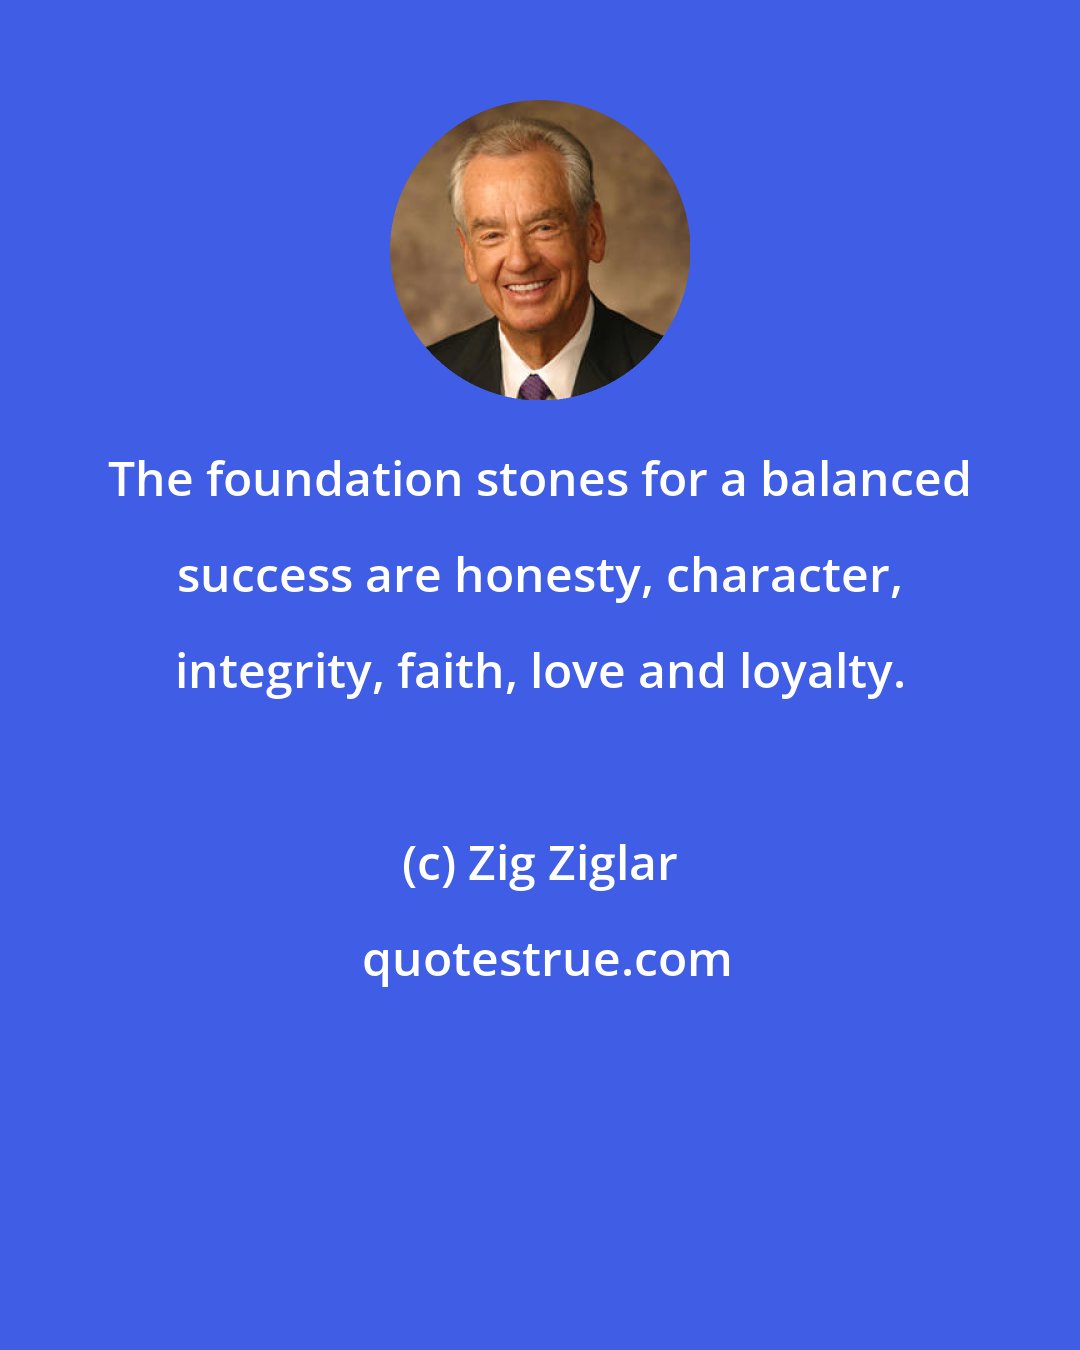 Zig Ziglar: The foundation stones for a balanced success are honesty, character, integrity, faith, love and loyalty.